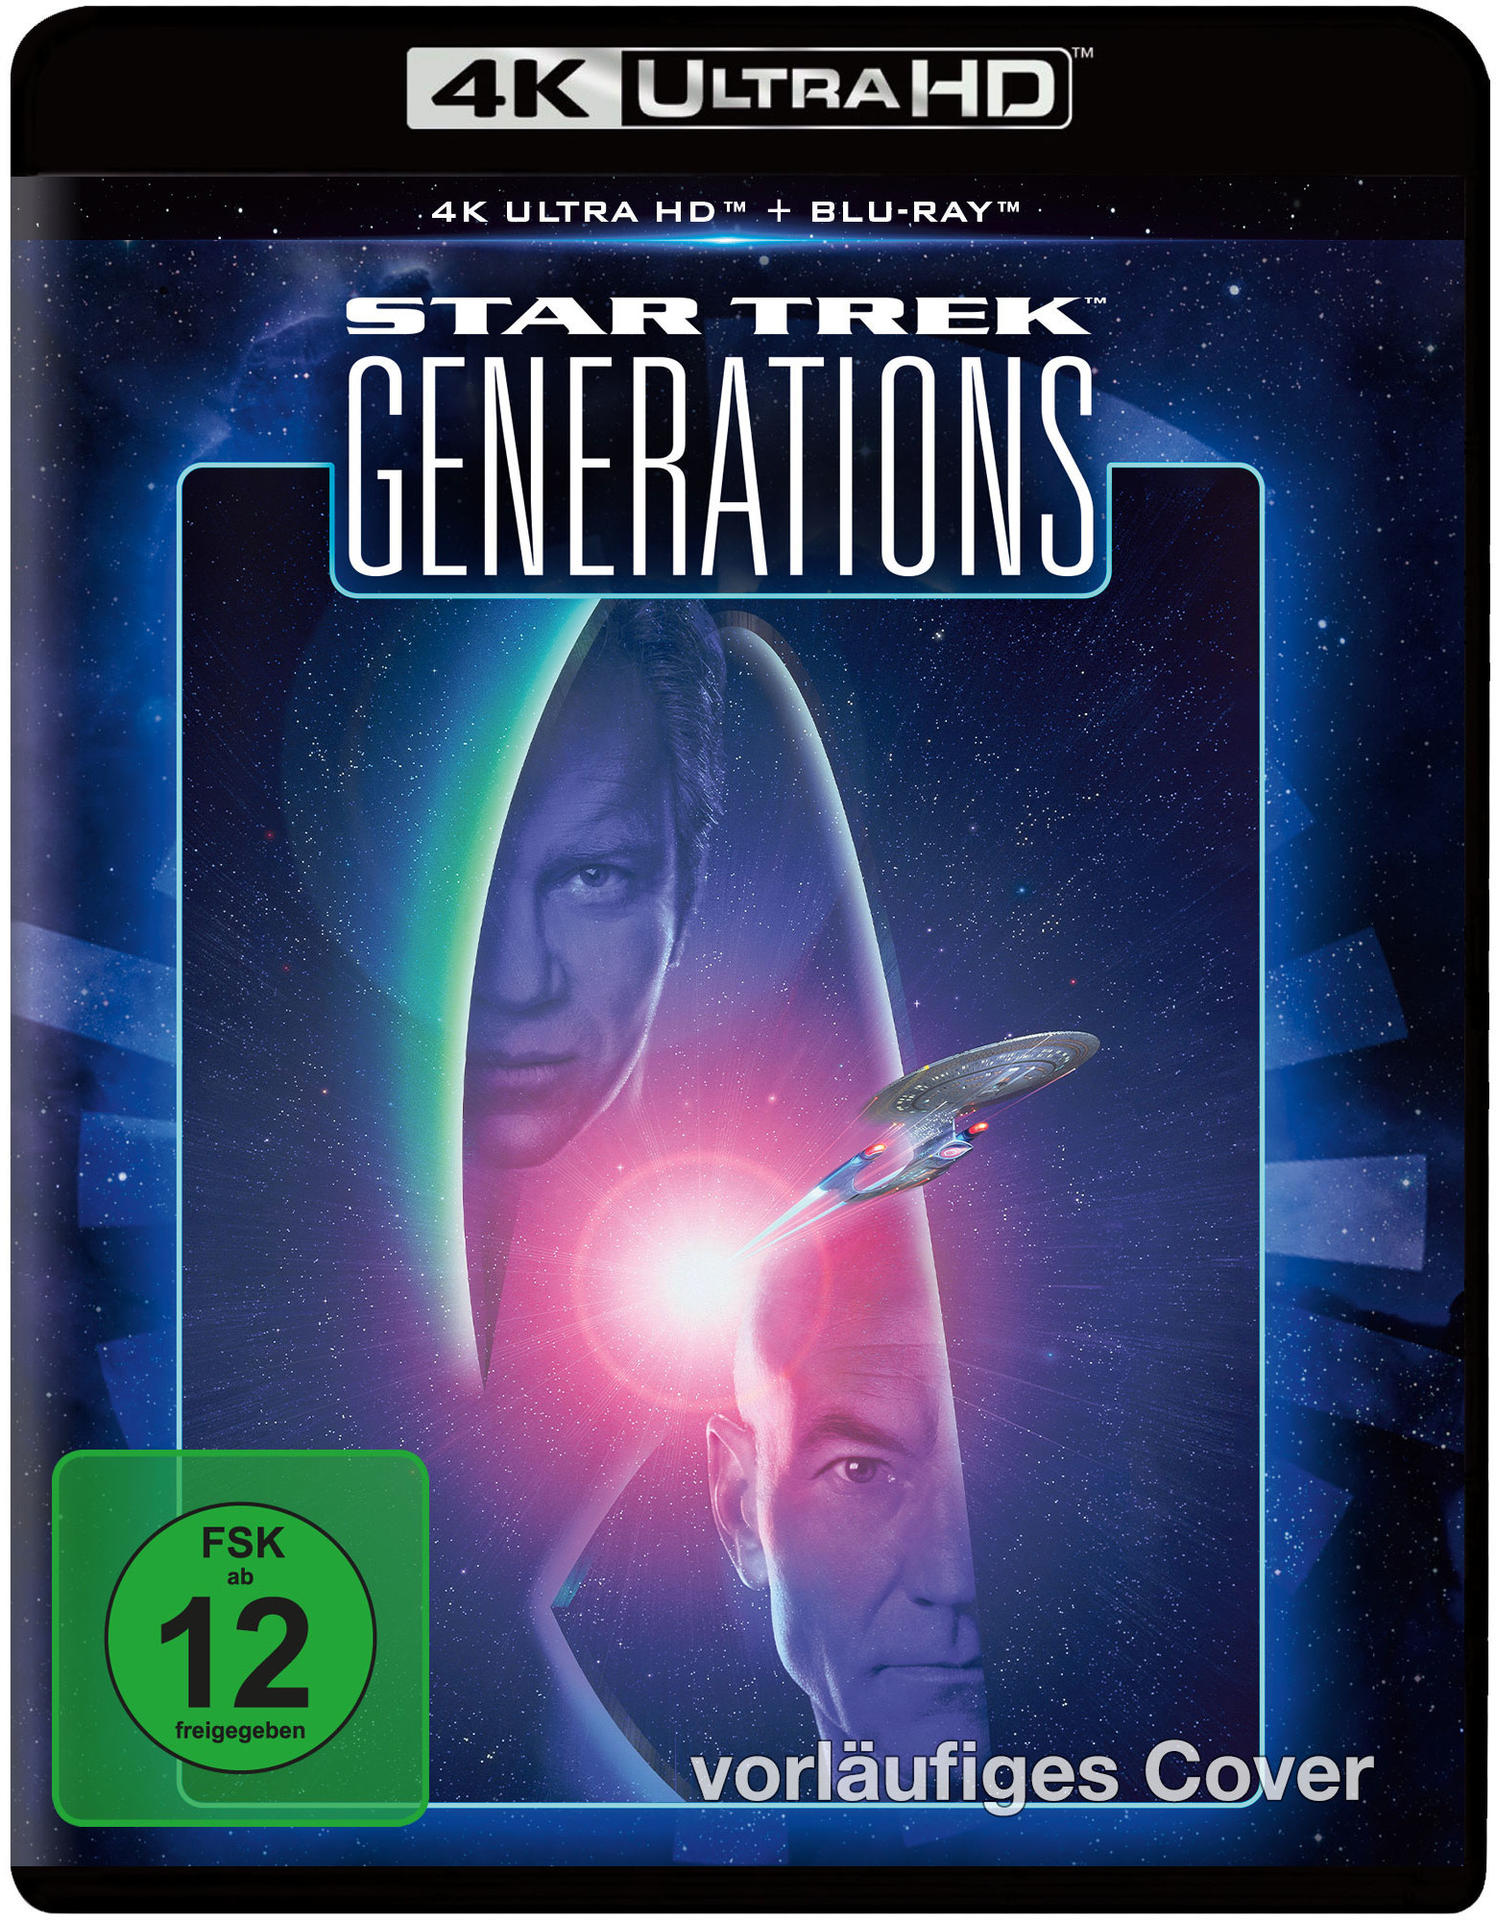 TREK 4K - Ultra VII Generationen STAR Treffen Blu-ray der HD + Blu-ray